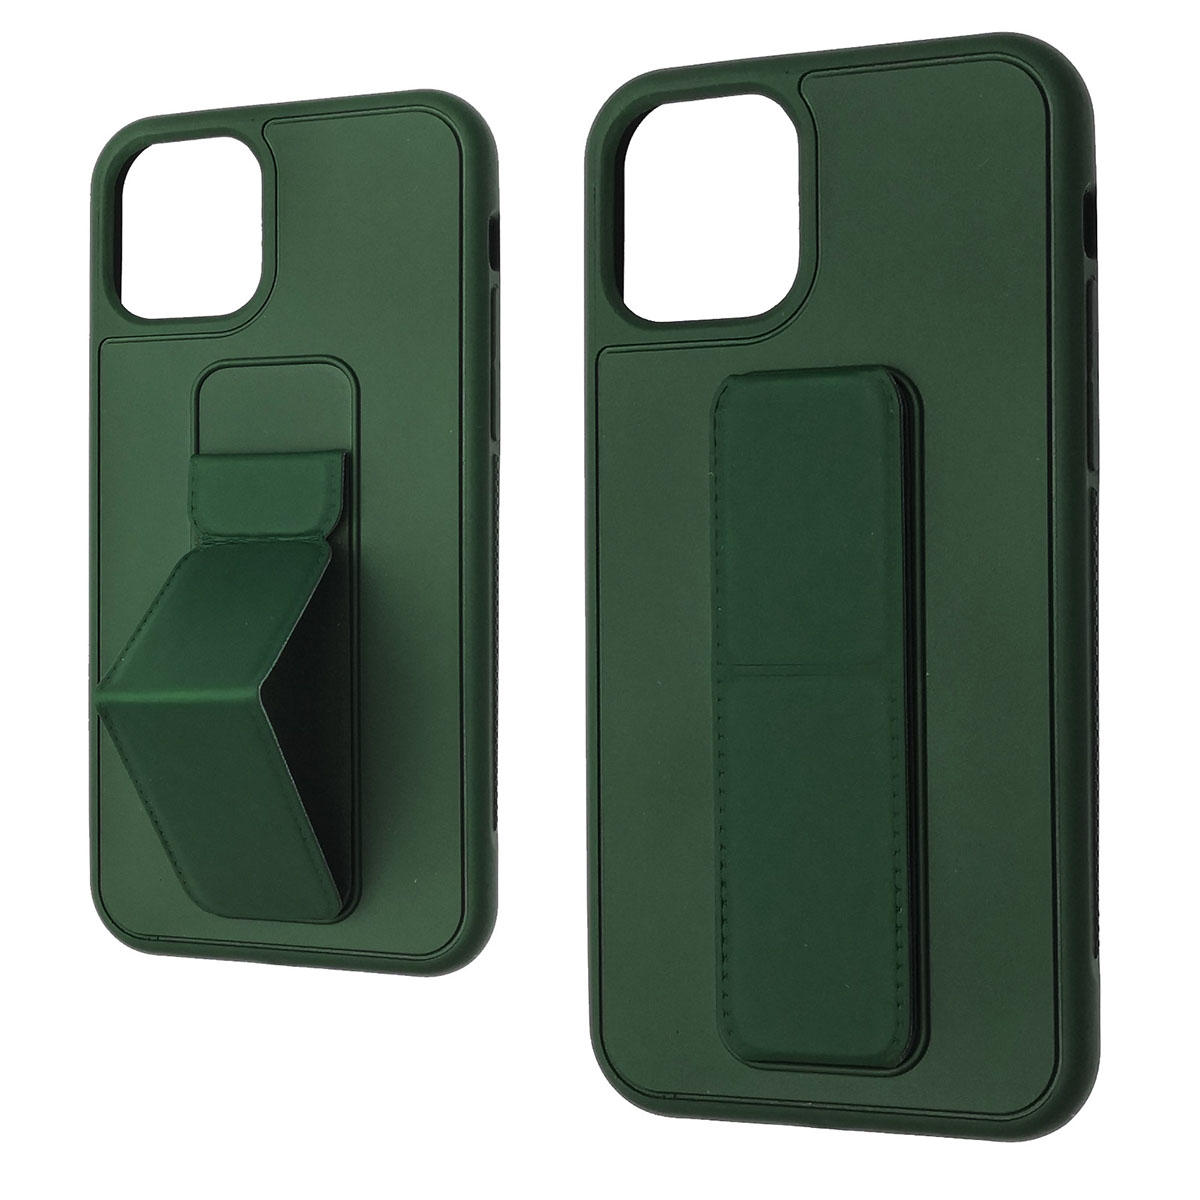 Чехол накладка STAND для APPLE iPhone 11 Pro, подставка, магнит, экокожа, цвет темно зеленый